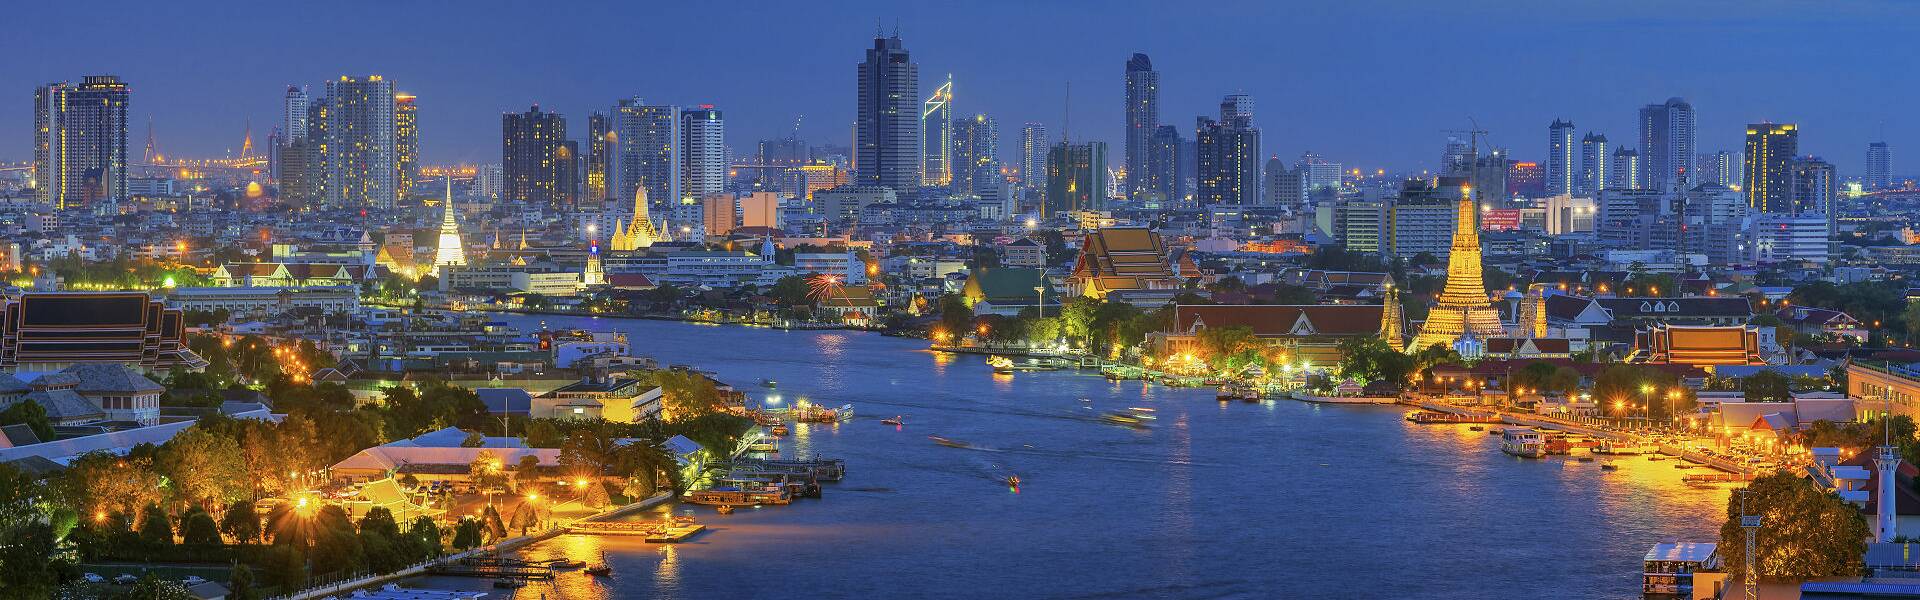 Der Chao Phraya Fluss – ein Highlight Bangkoks